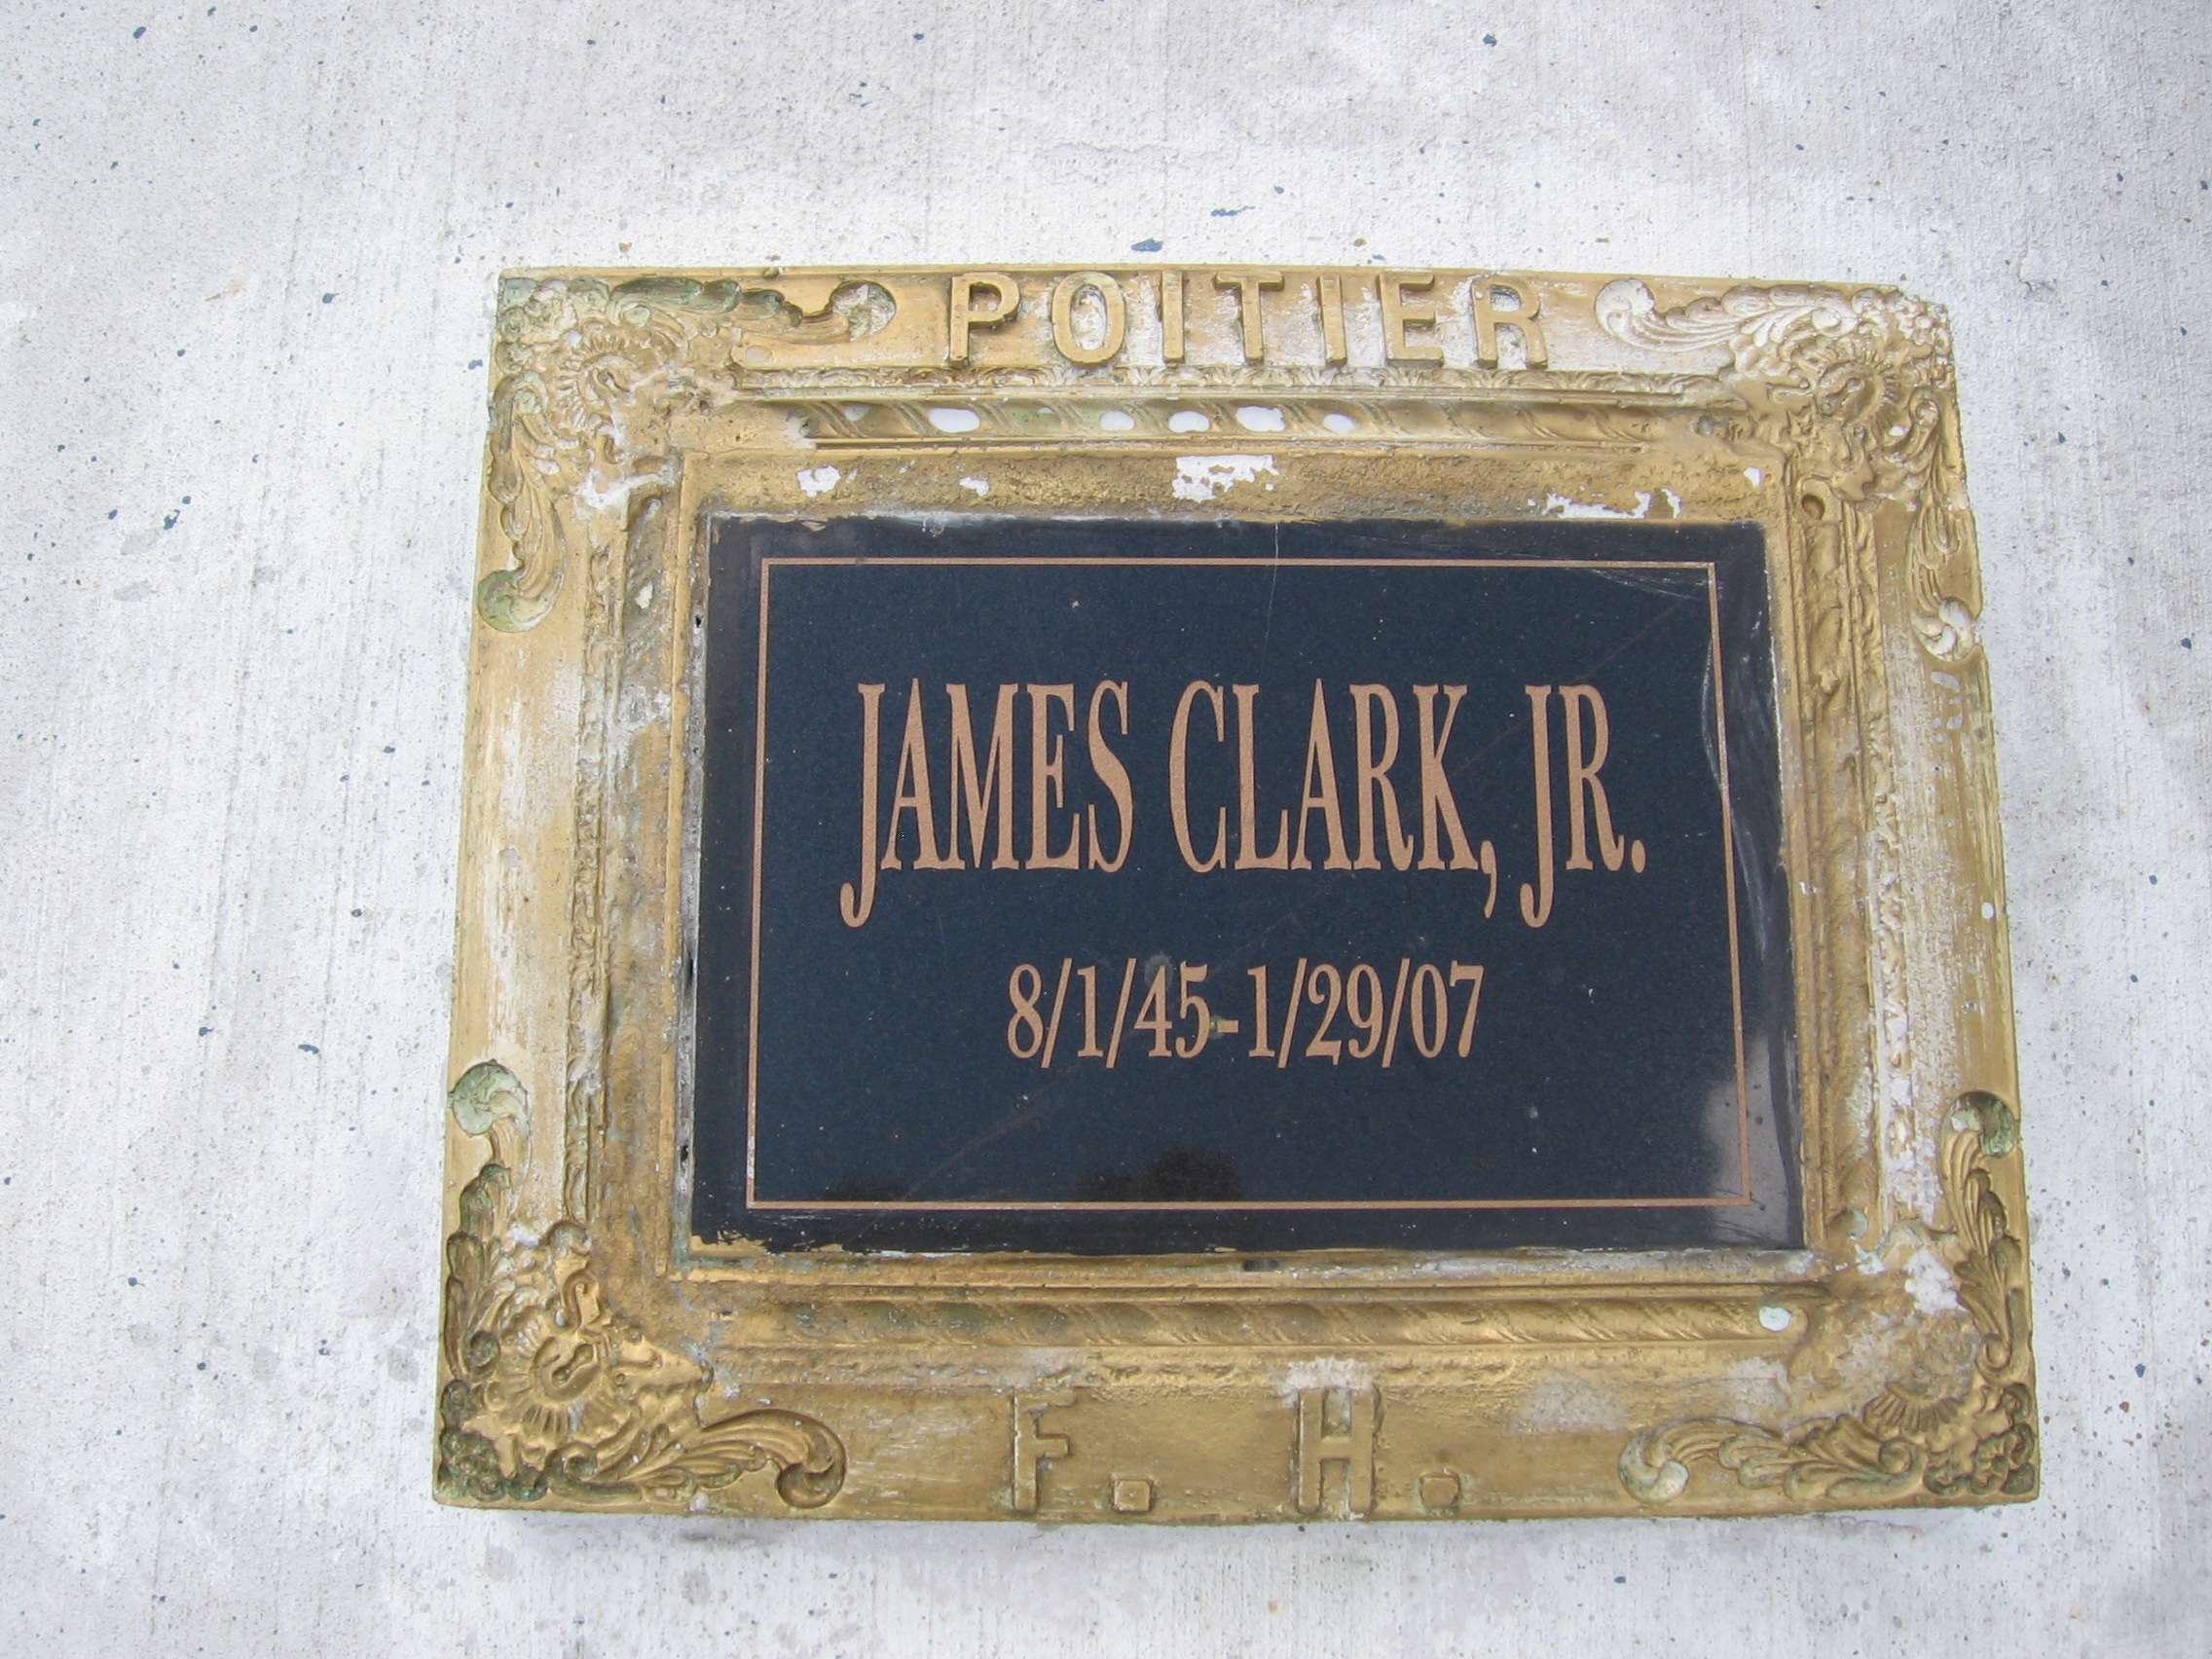 James Clark, Jr